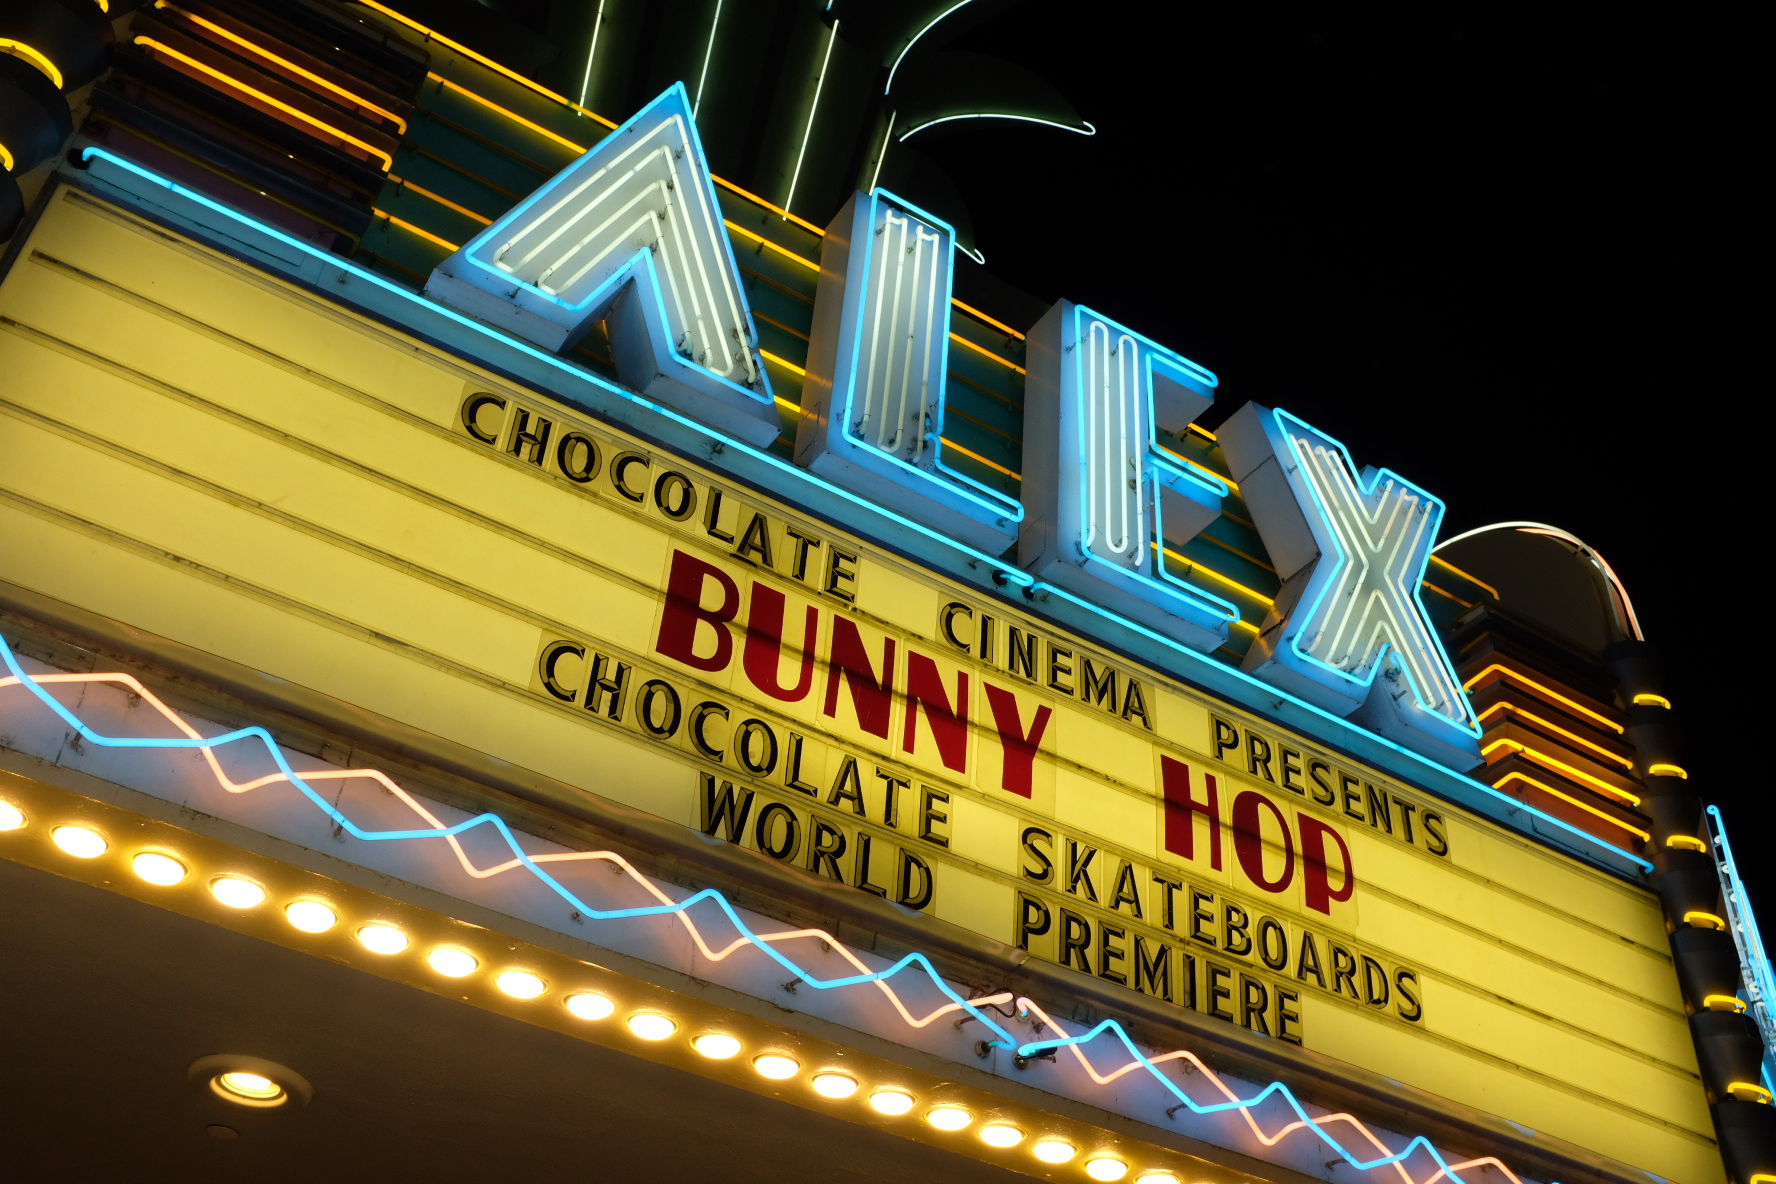 Chocolate Skateboards “Bunny Hop” Premiere